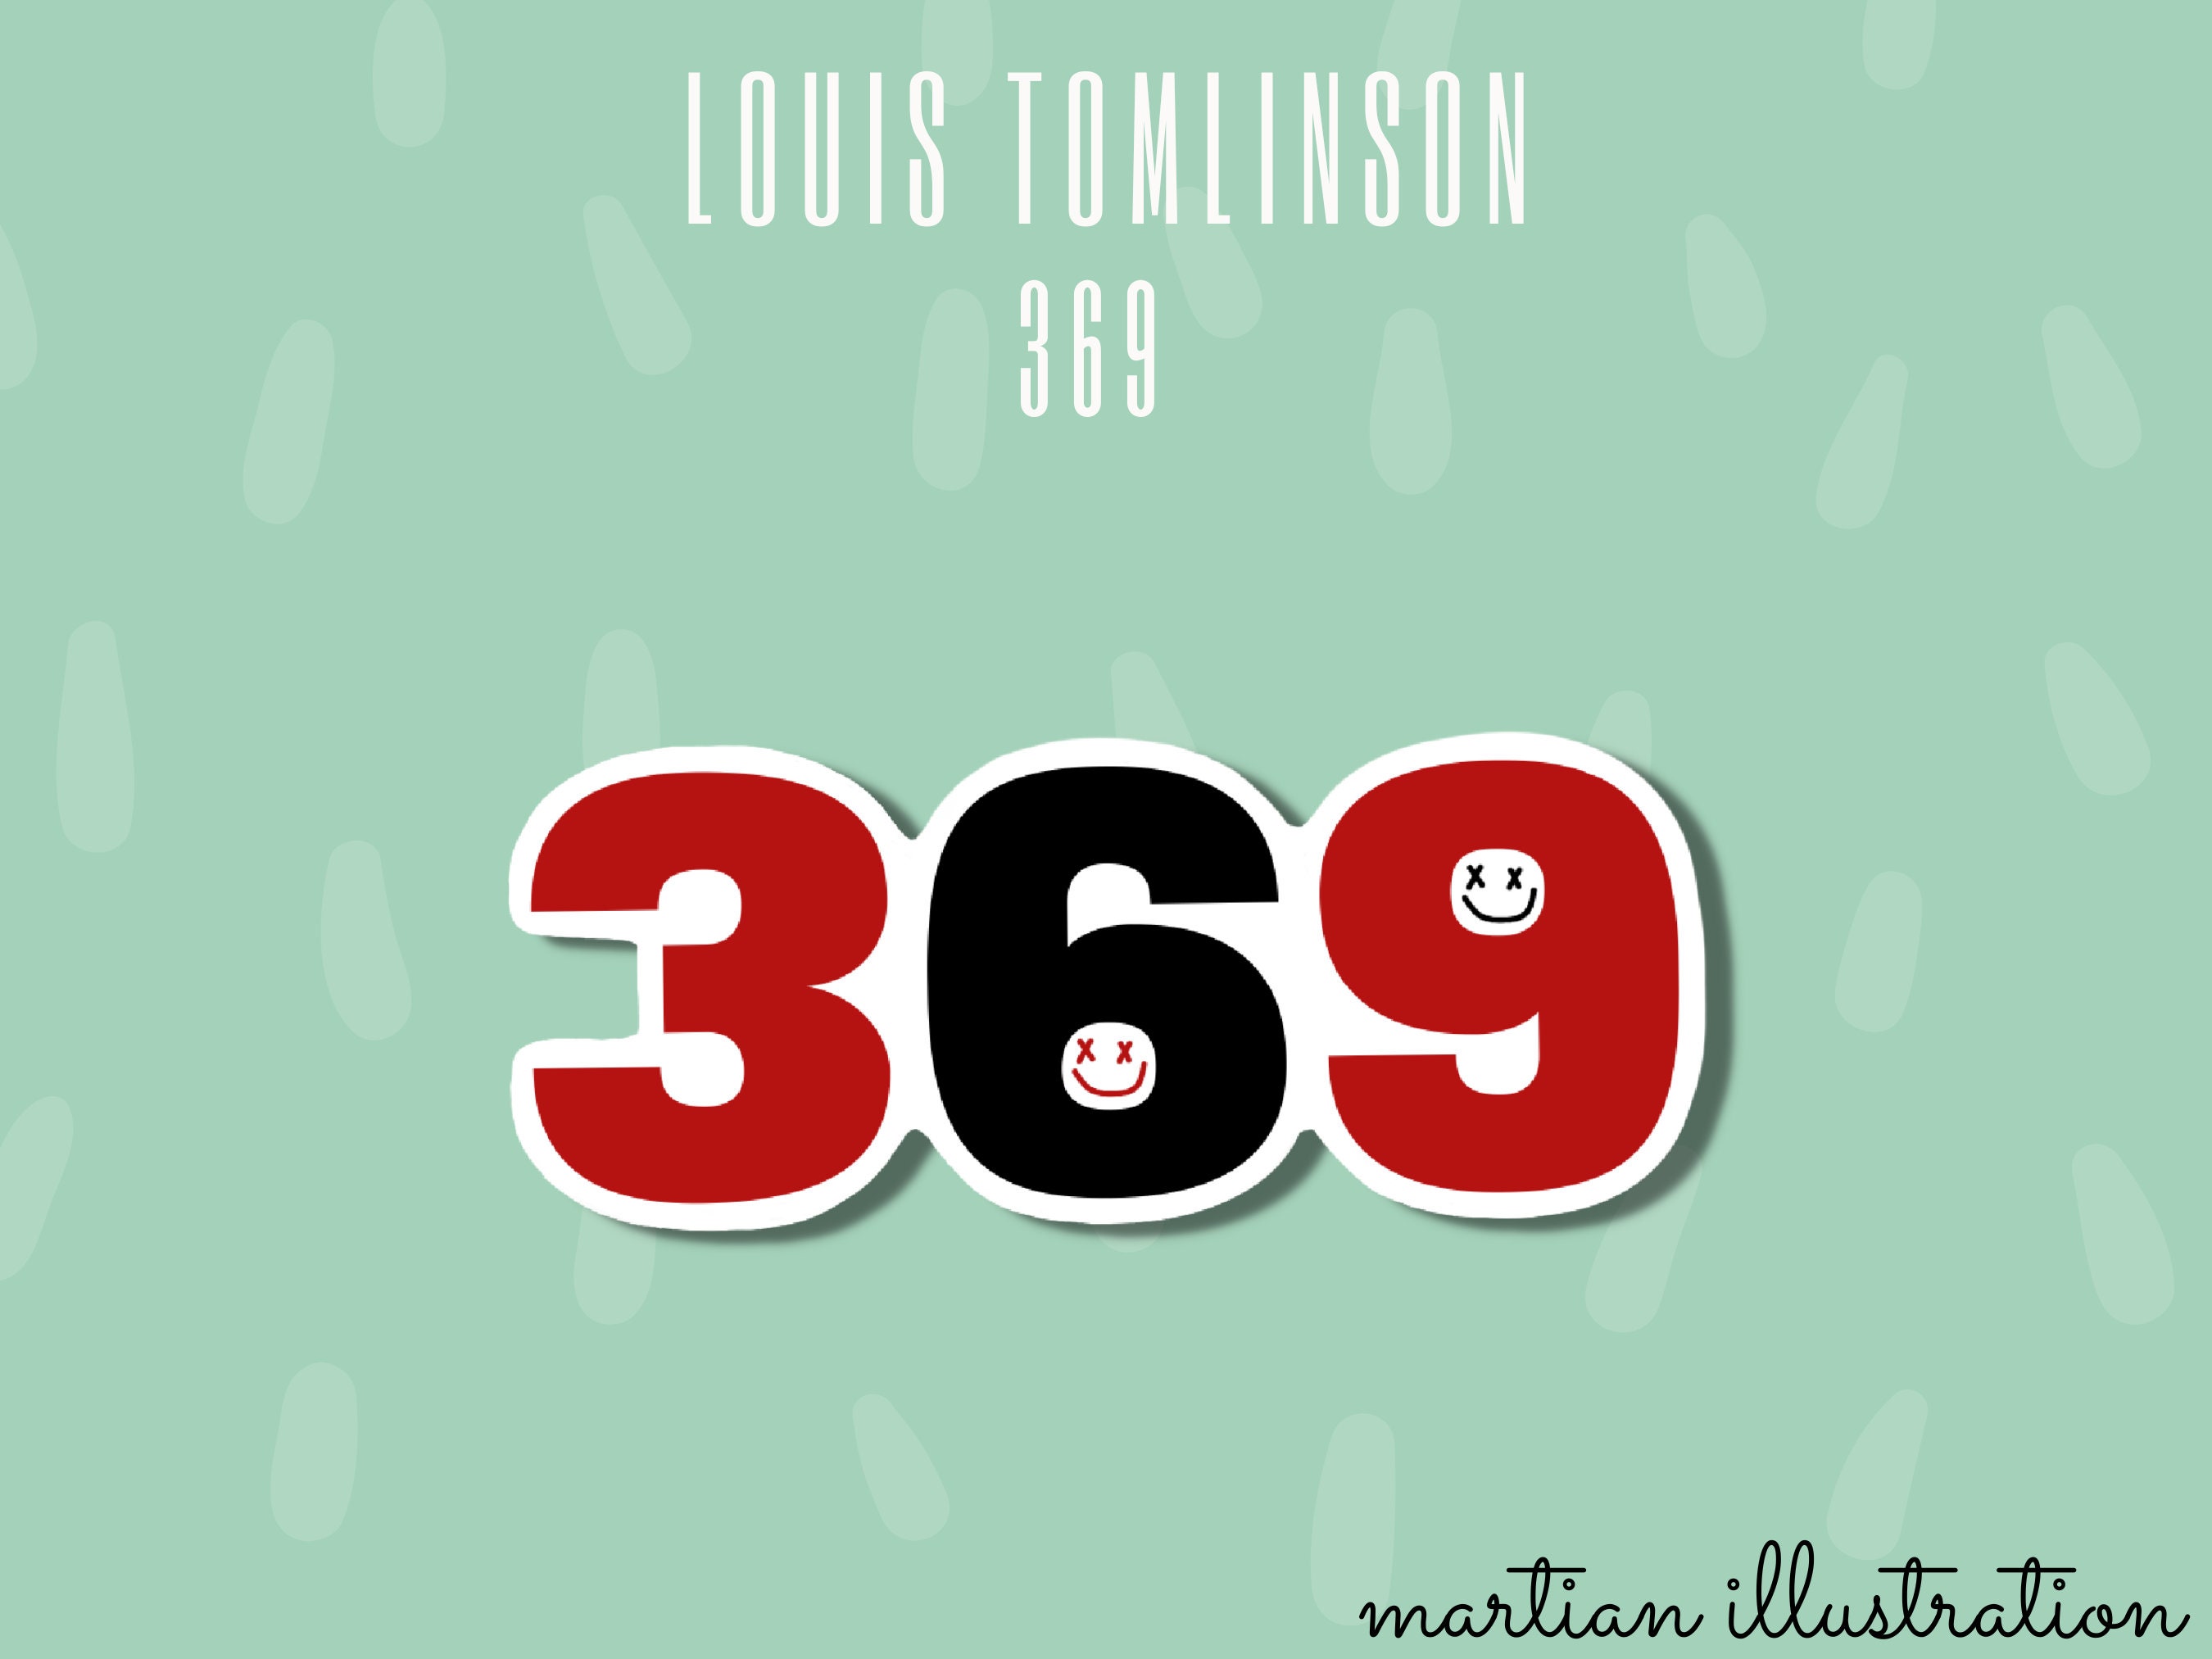 Louis Tomlinson's 369 Merch has dropped 